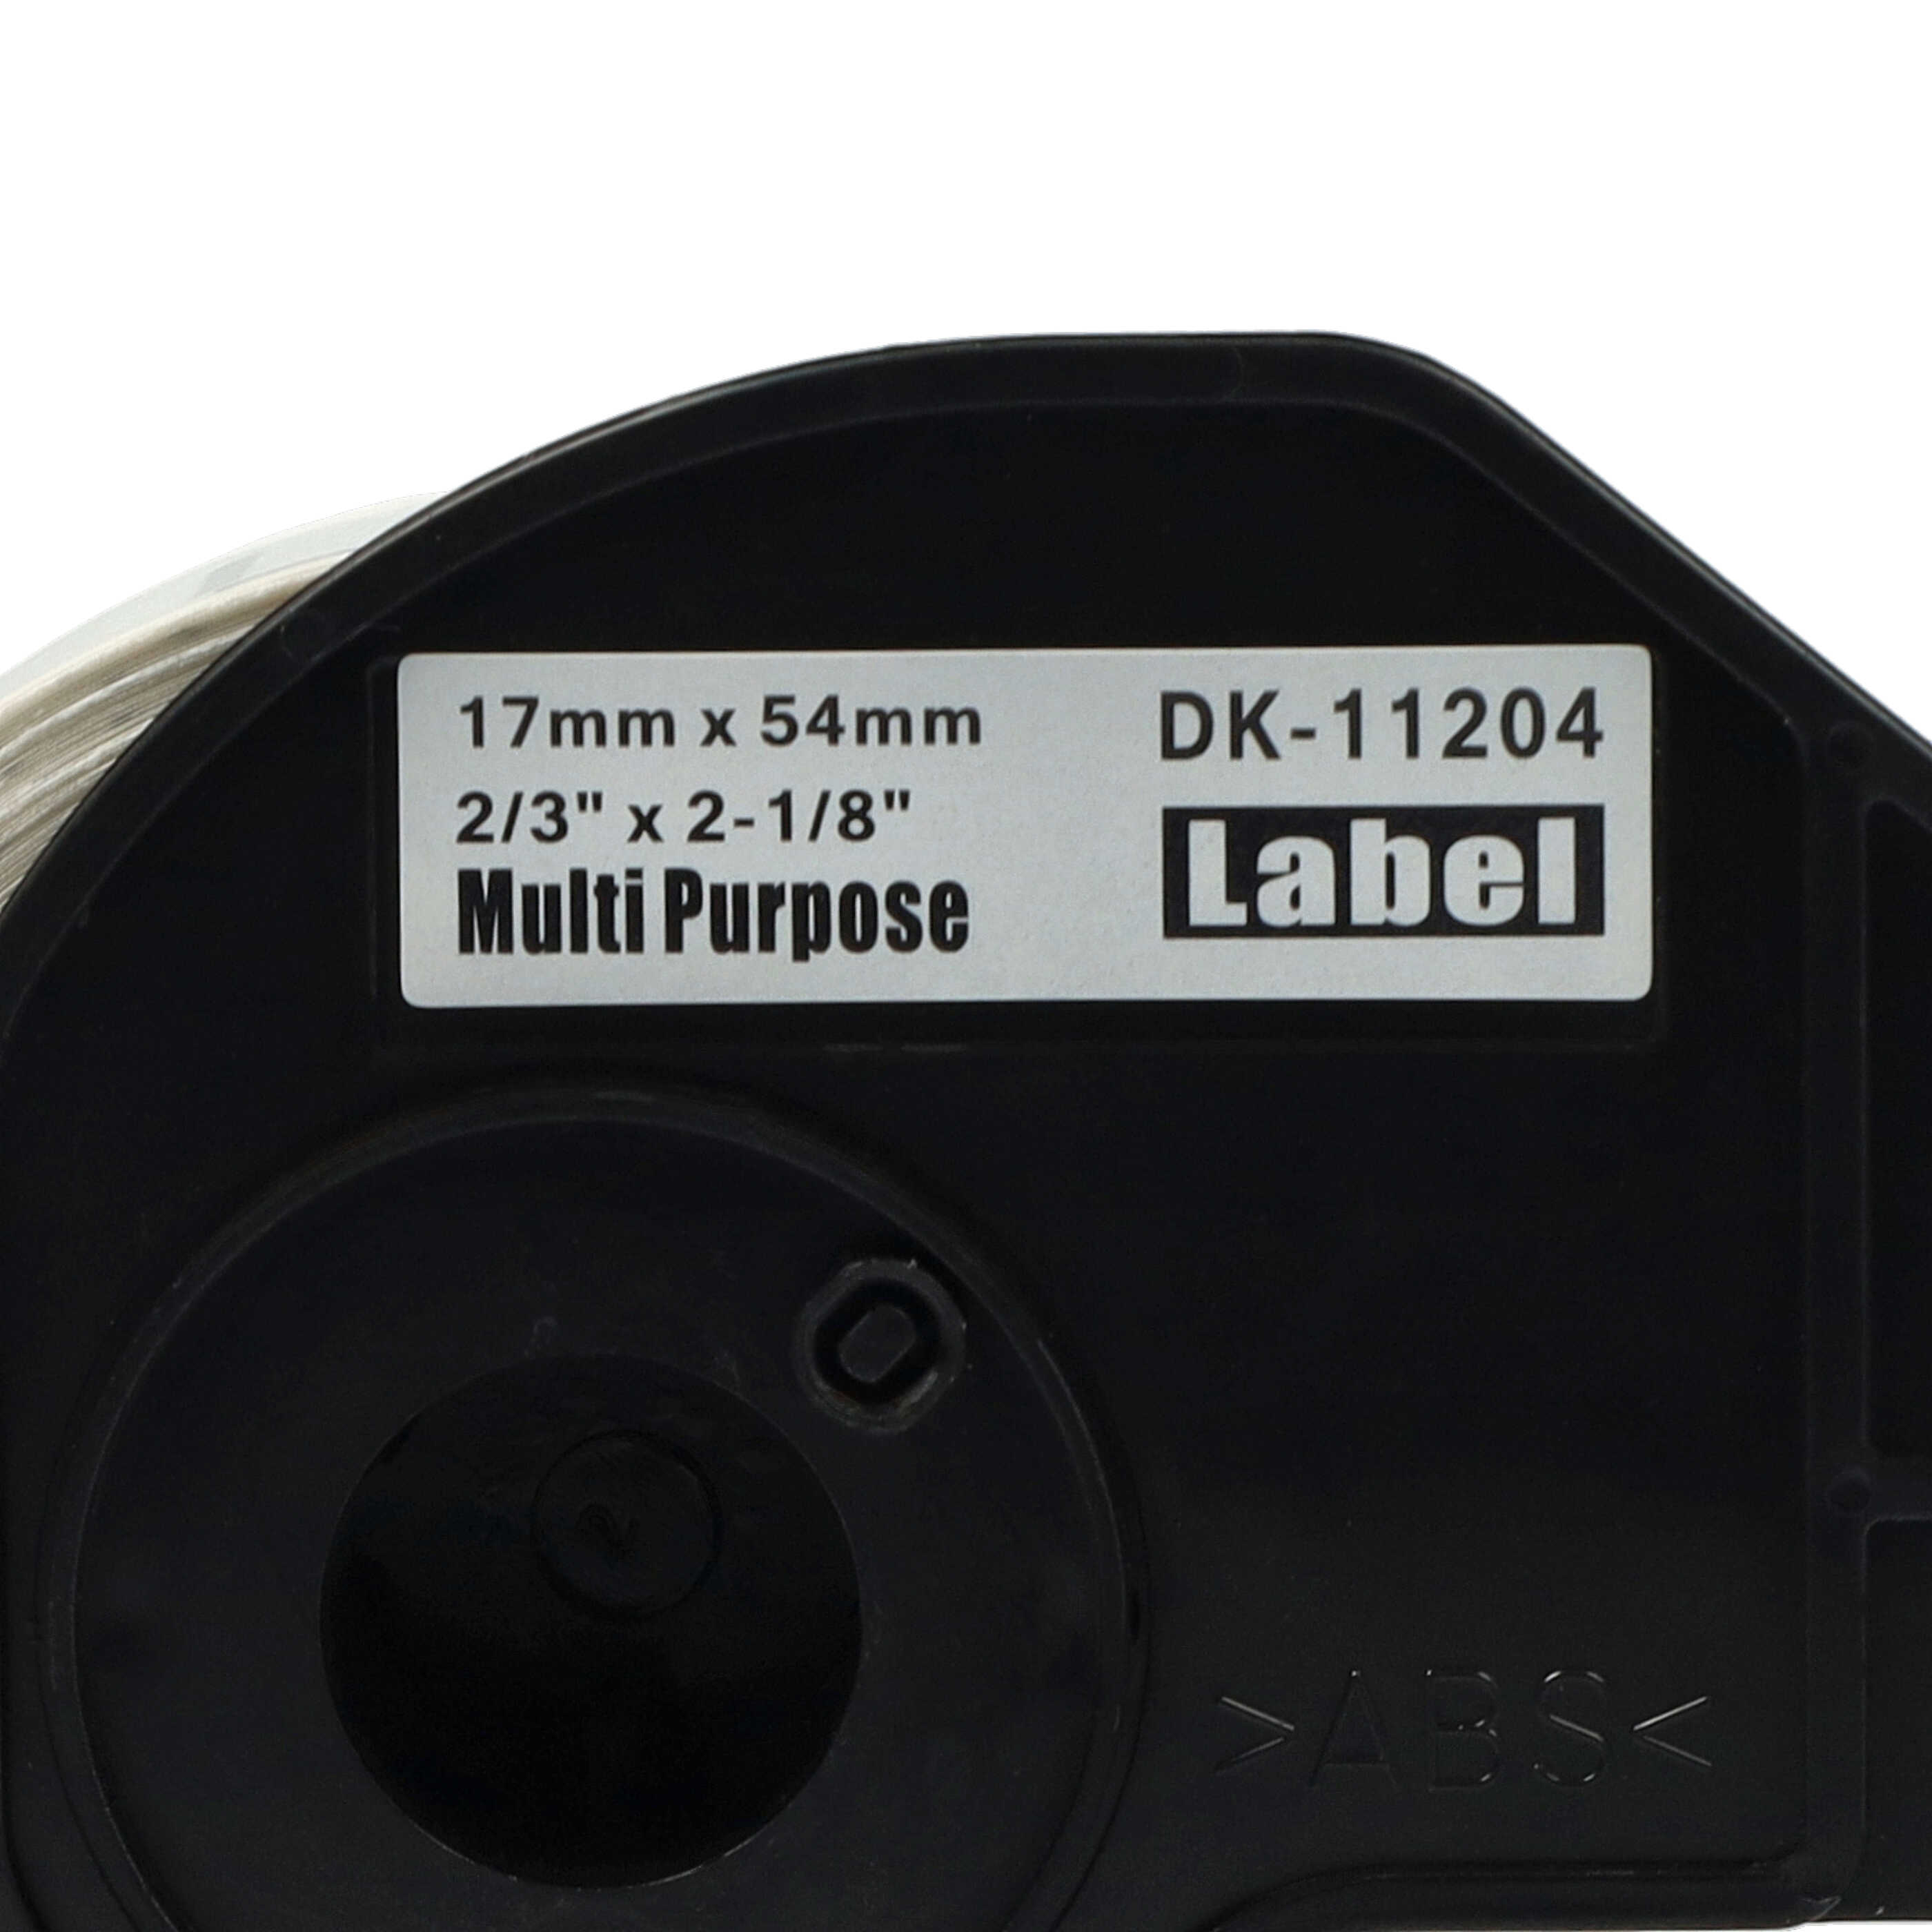 10x Etiquetas reemplaza Brother DK-11204 para impresora etiquetas - 17 mm x 54 mm + soporte